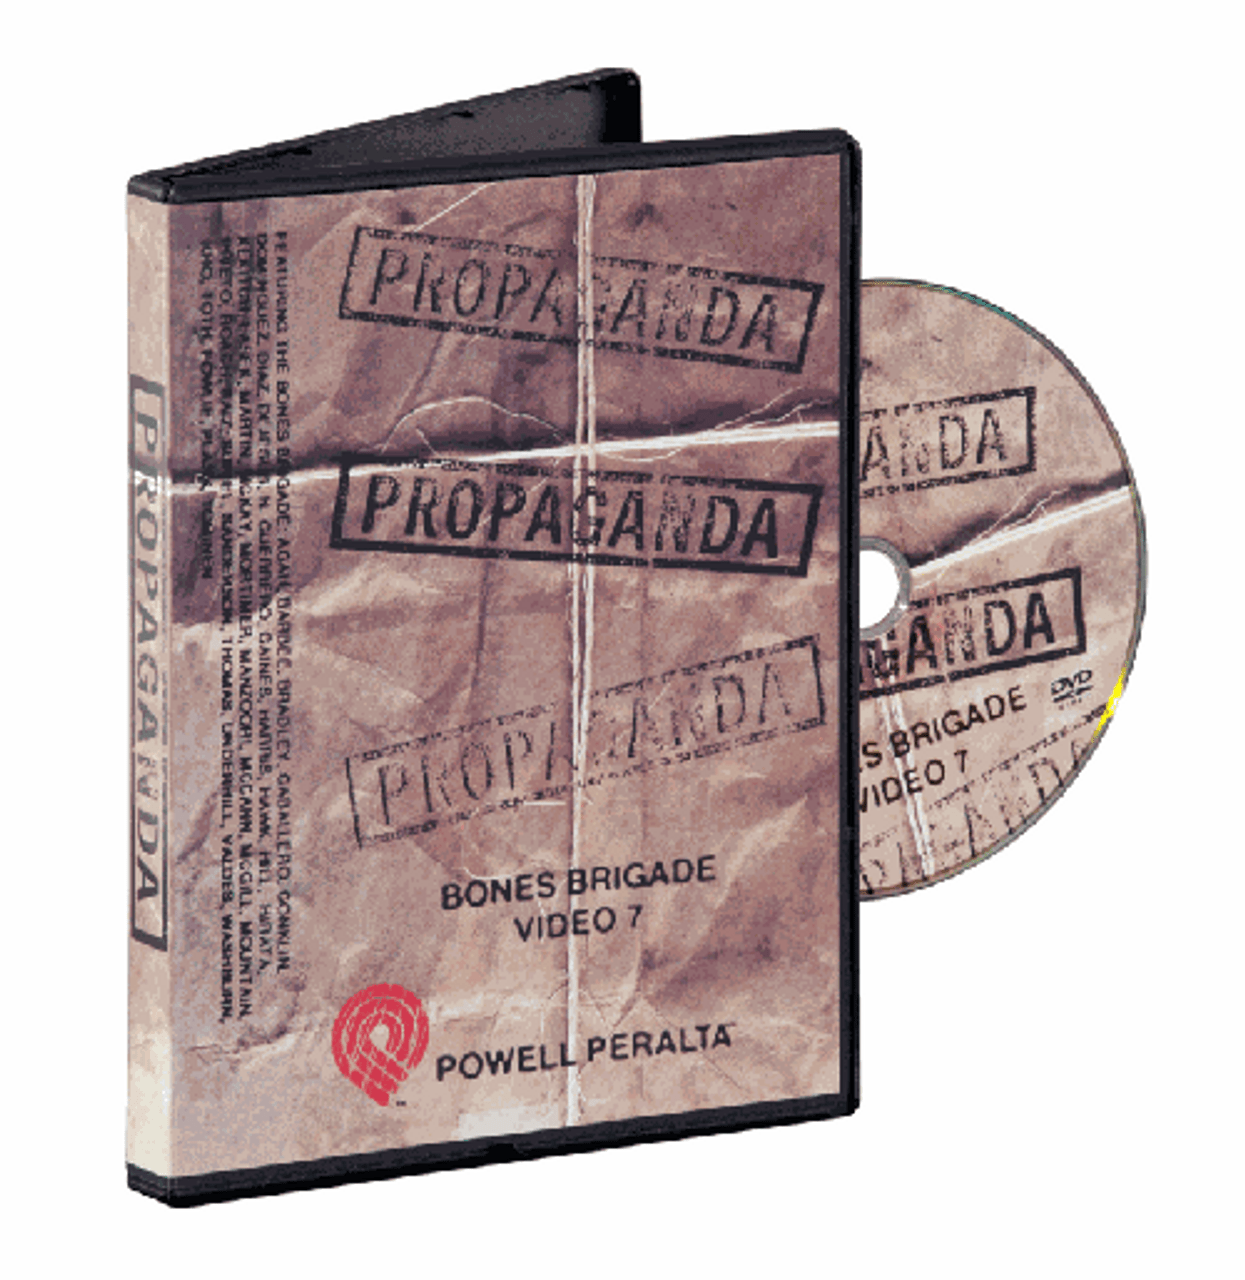 Powell Peralta Propaganda DVD